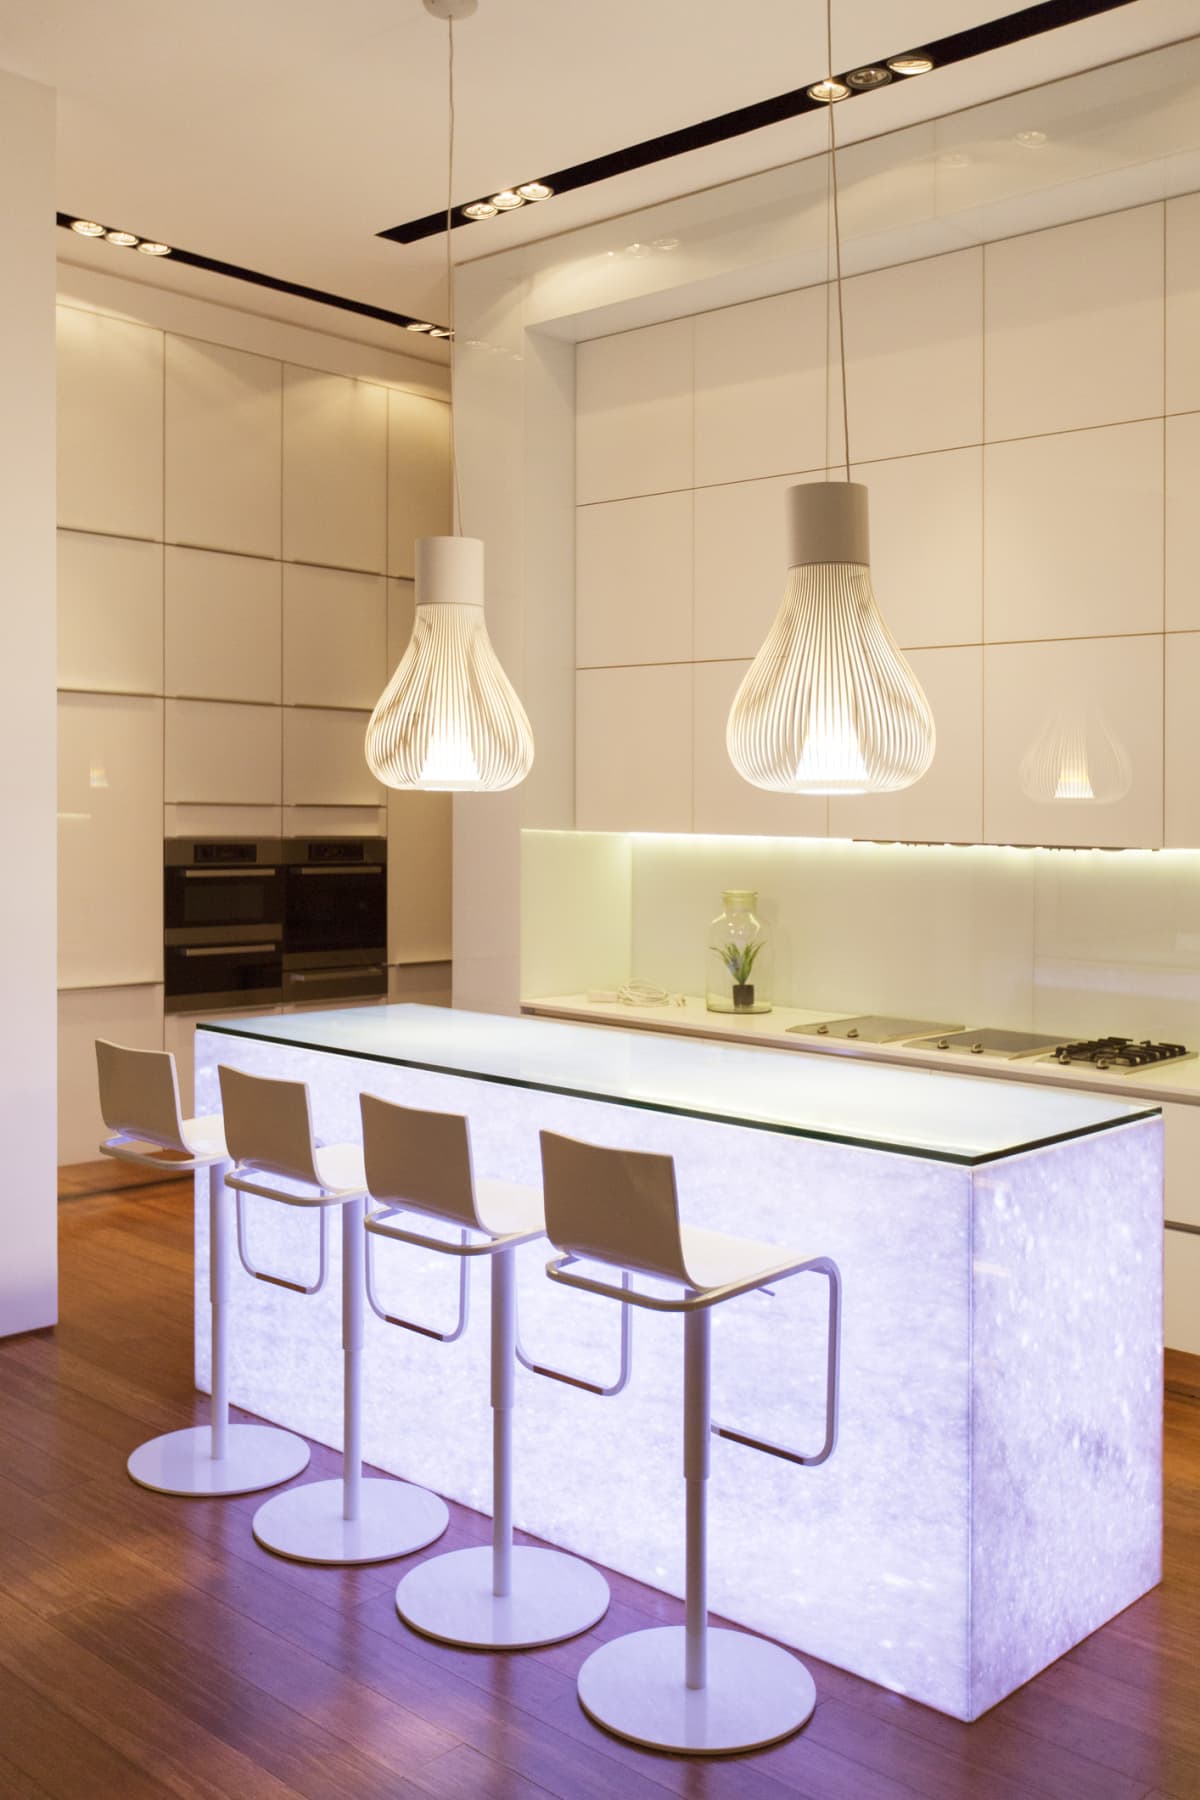 Modern kitchen design with central island of white composite Corian